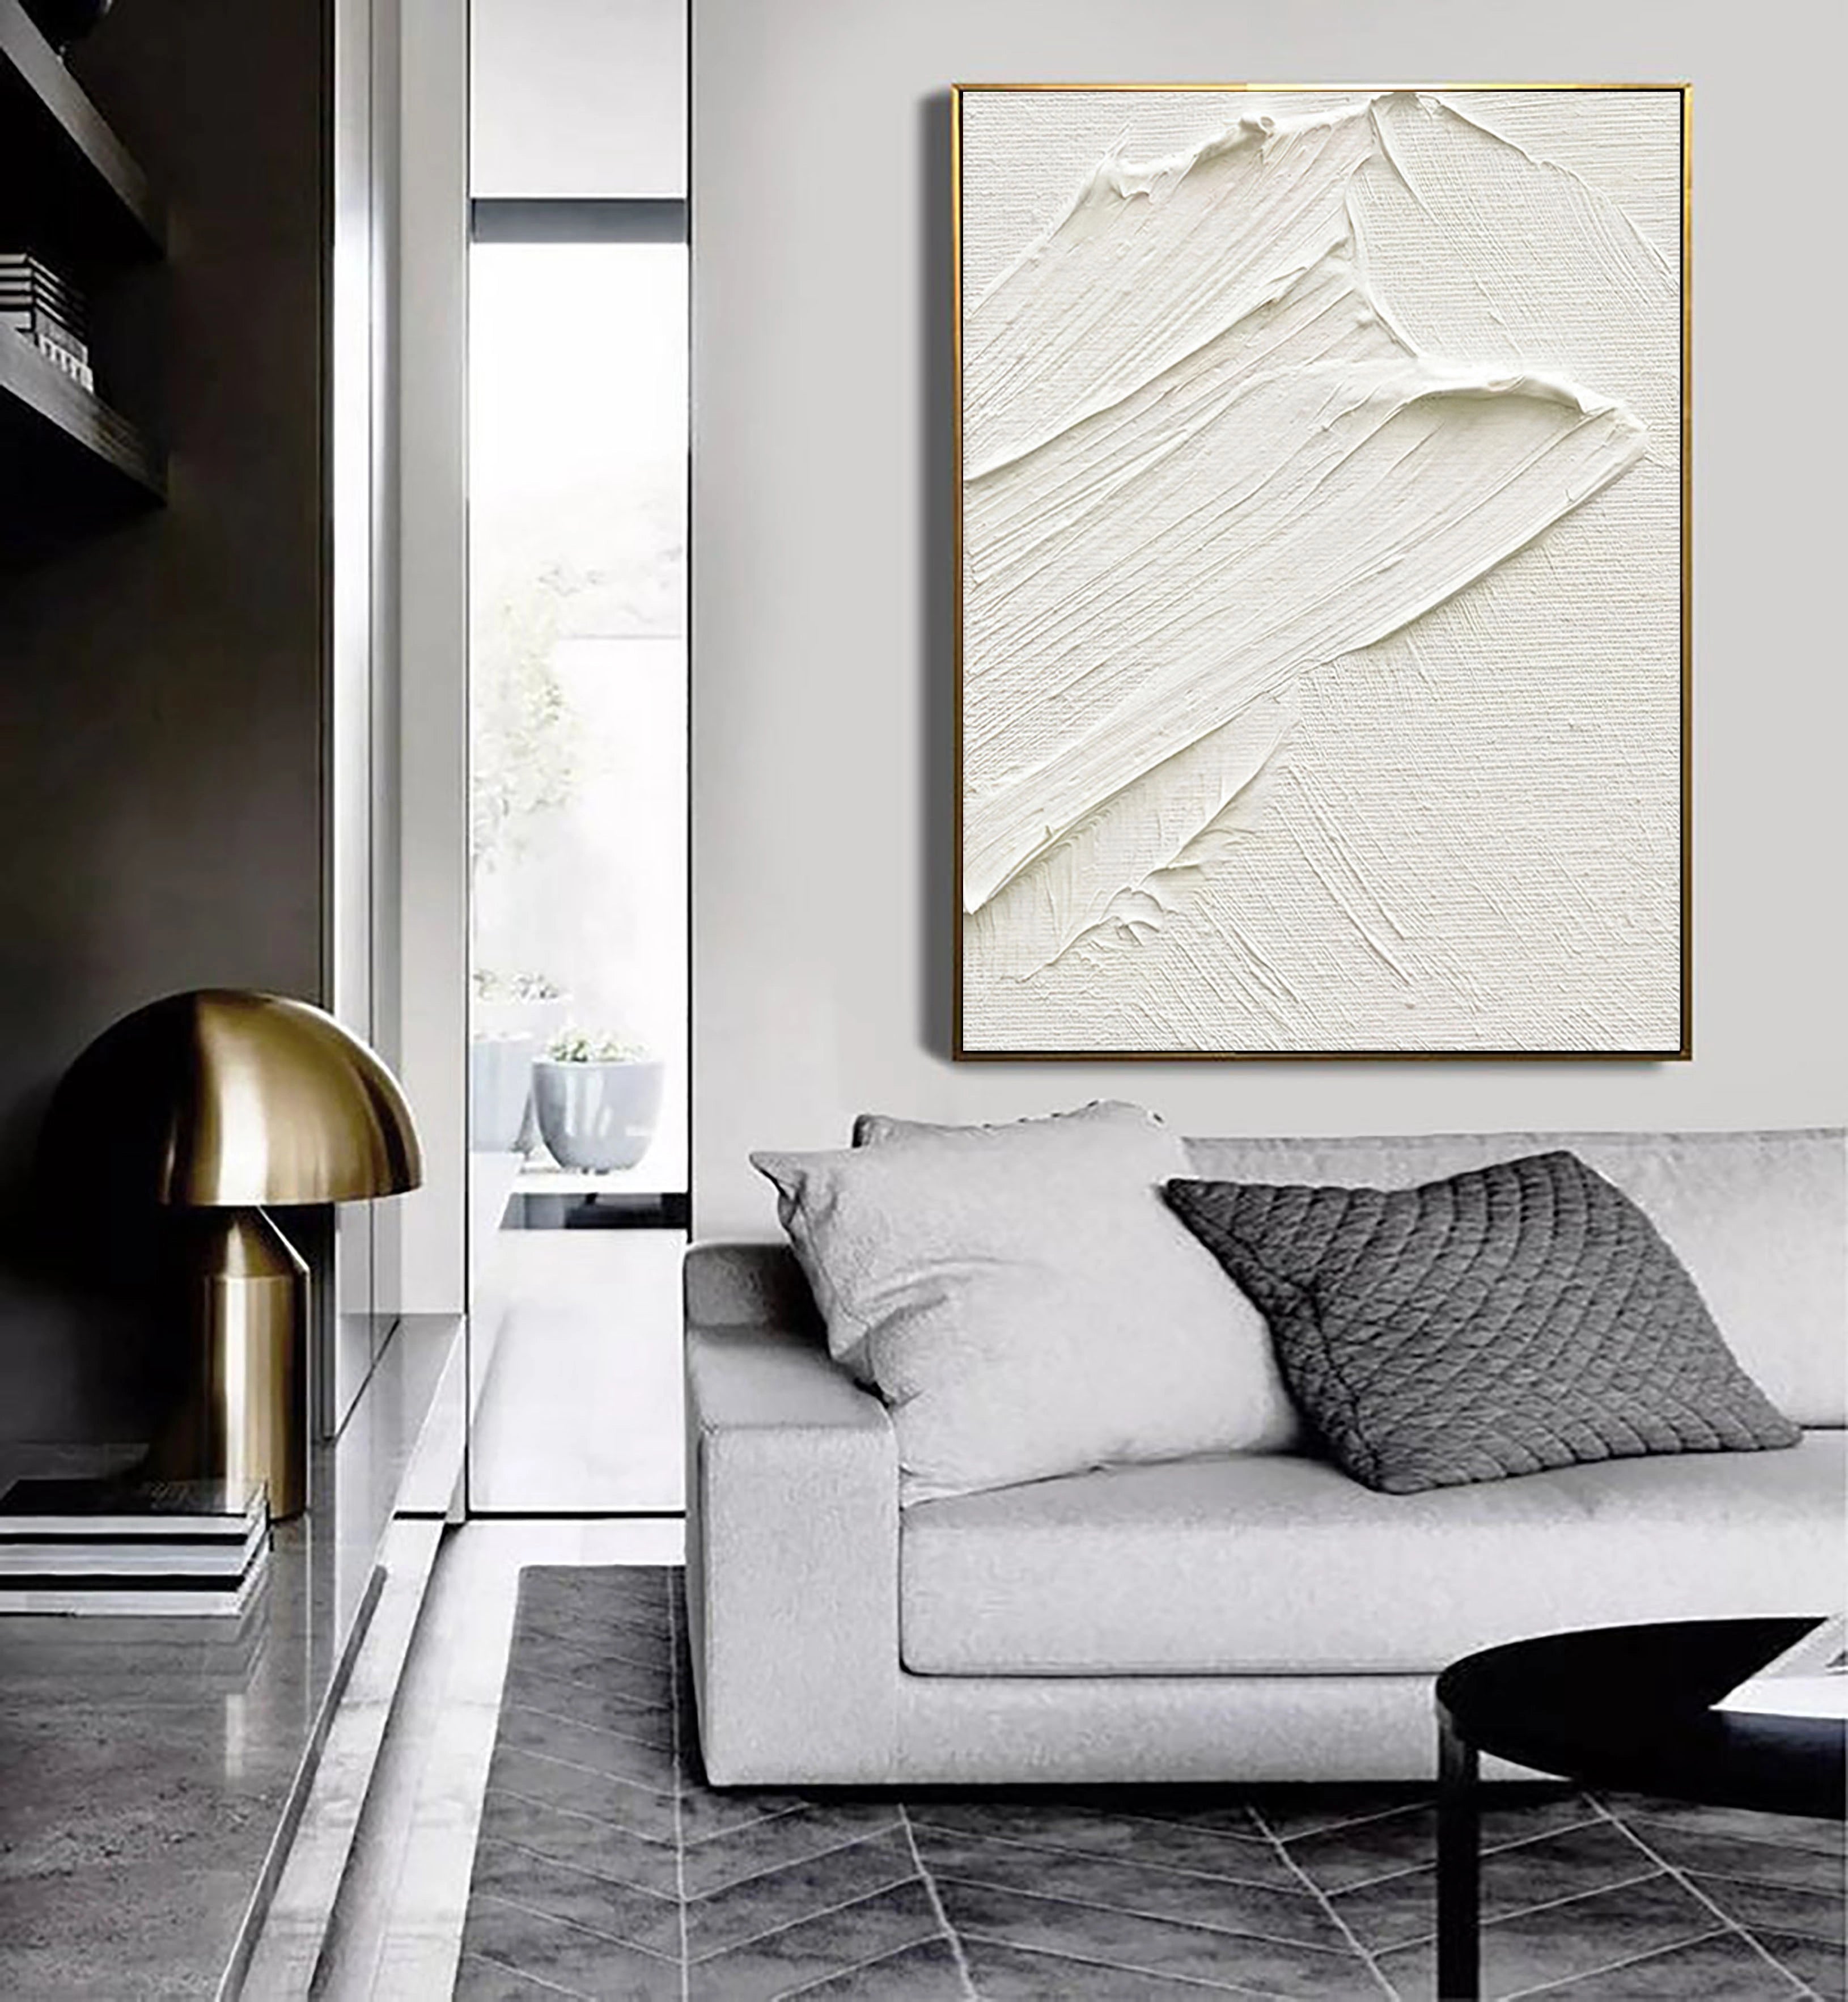 White Sea Slap Plaster Art Painting Minimalistic Balance on Large Canvas